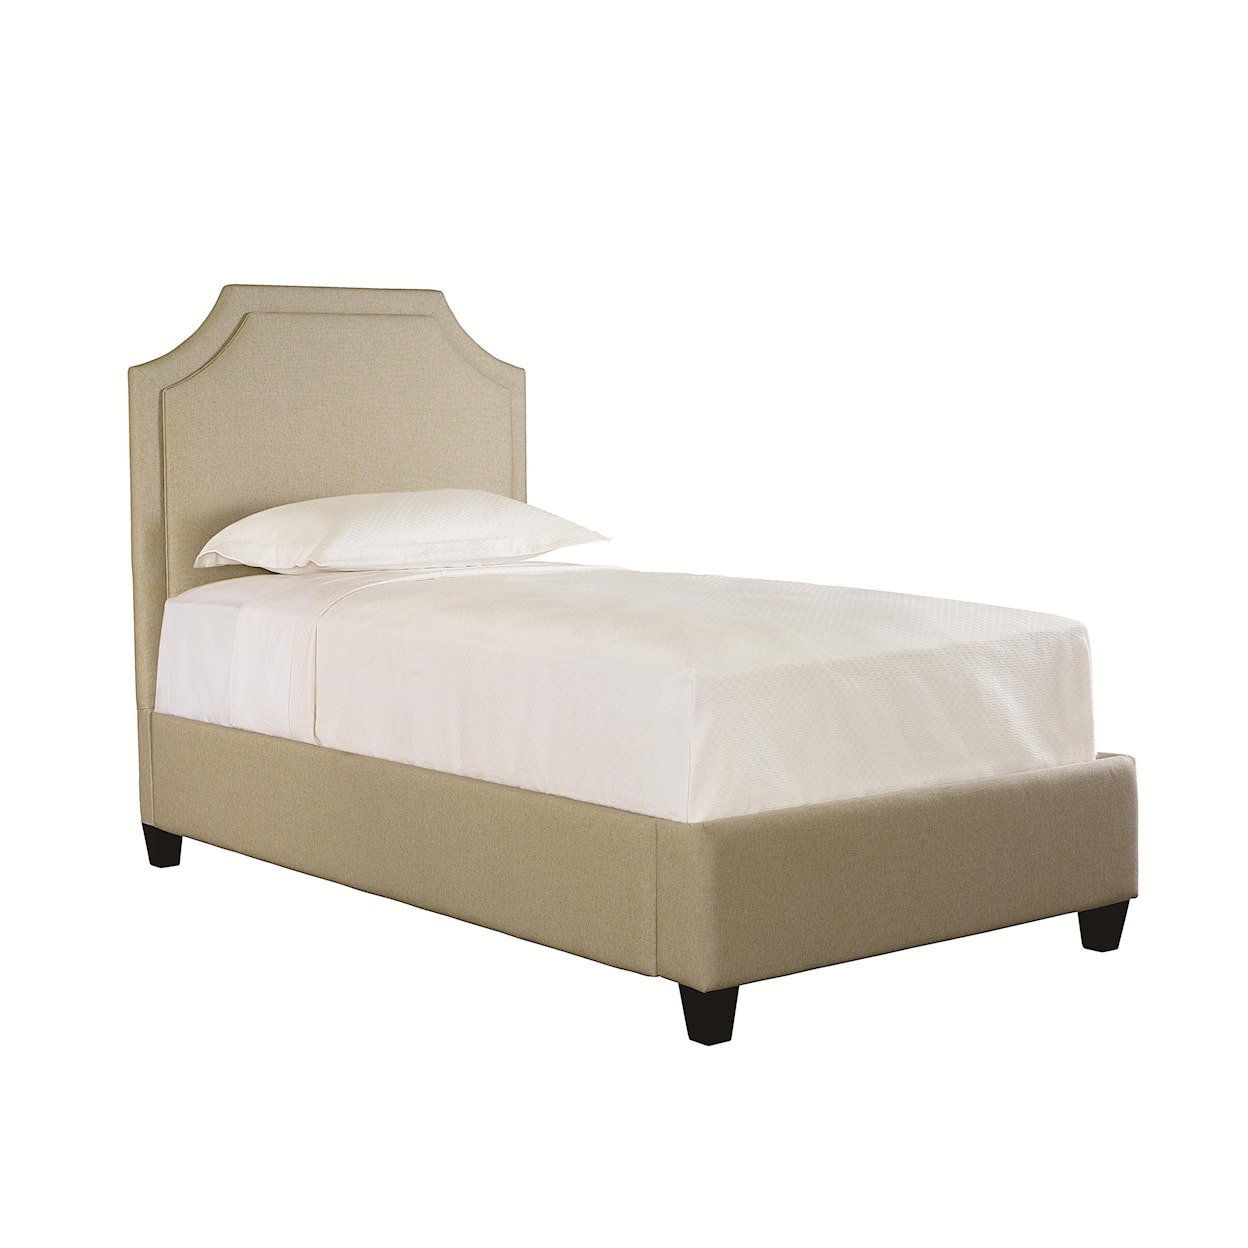 Bassett Custom Upholstered Beds Full Florence Upholstered Bed with Low FB 